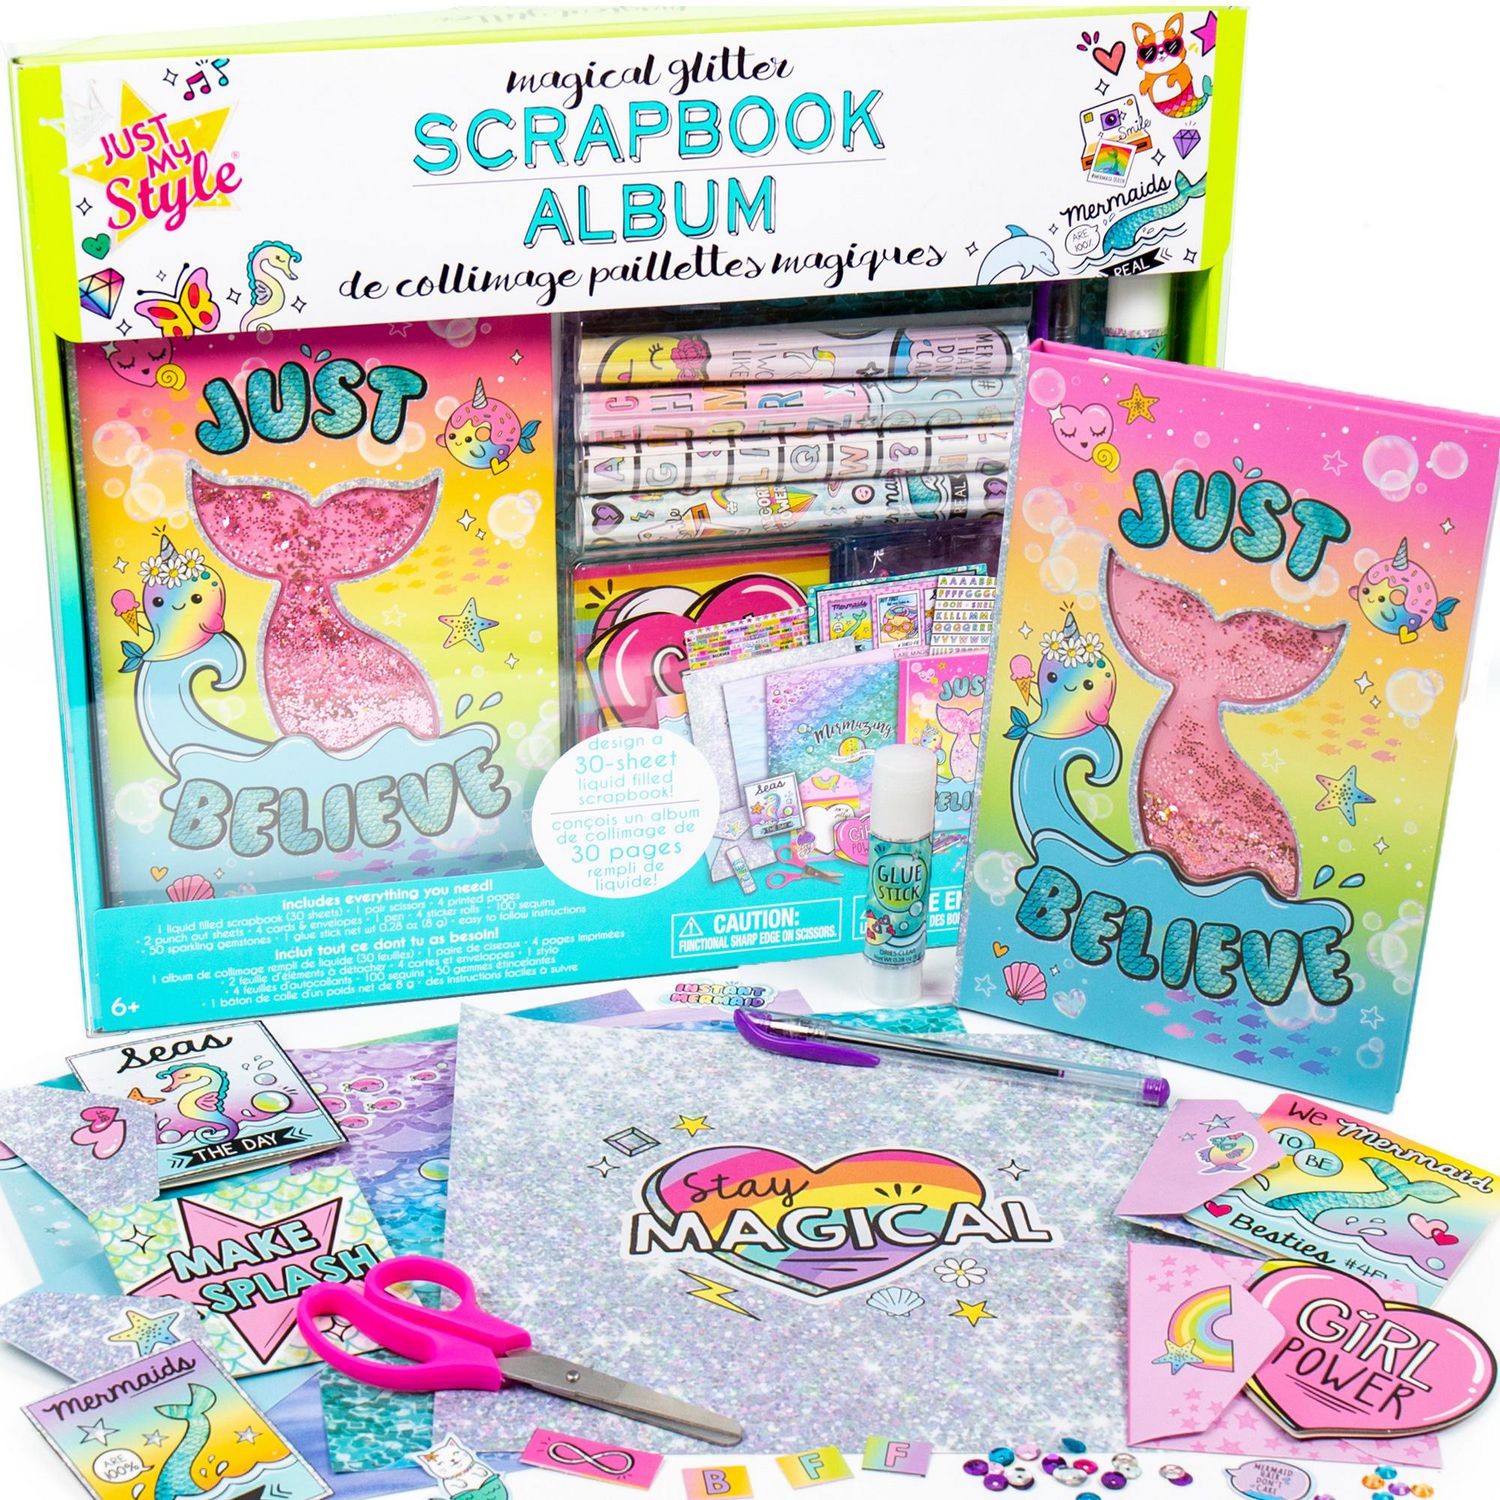 How to Make a Baby Scrapbook Album - Digital Scrapbooking HQ